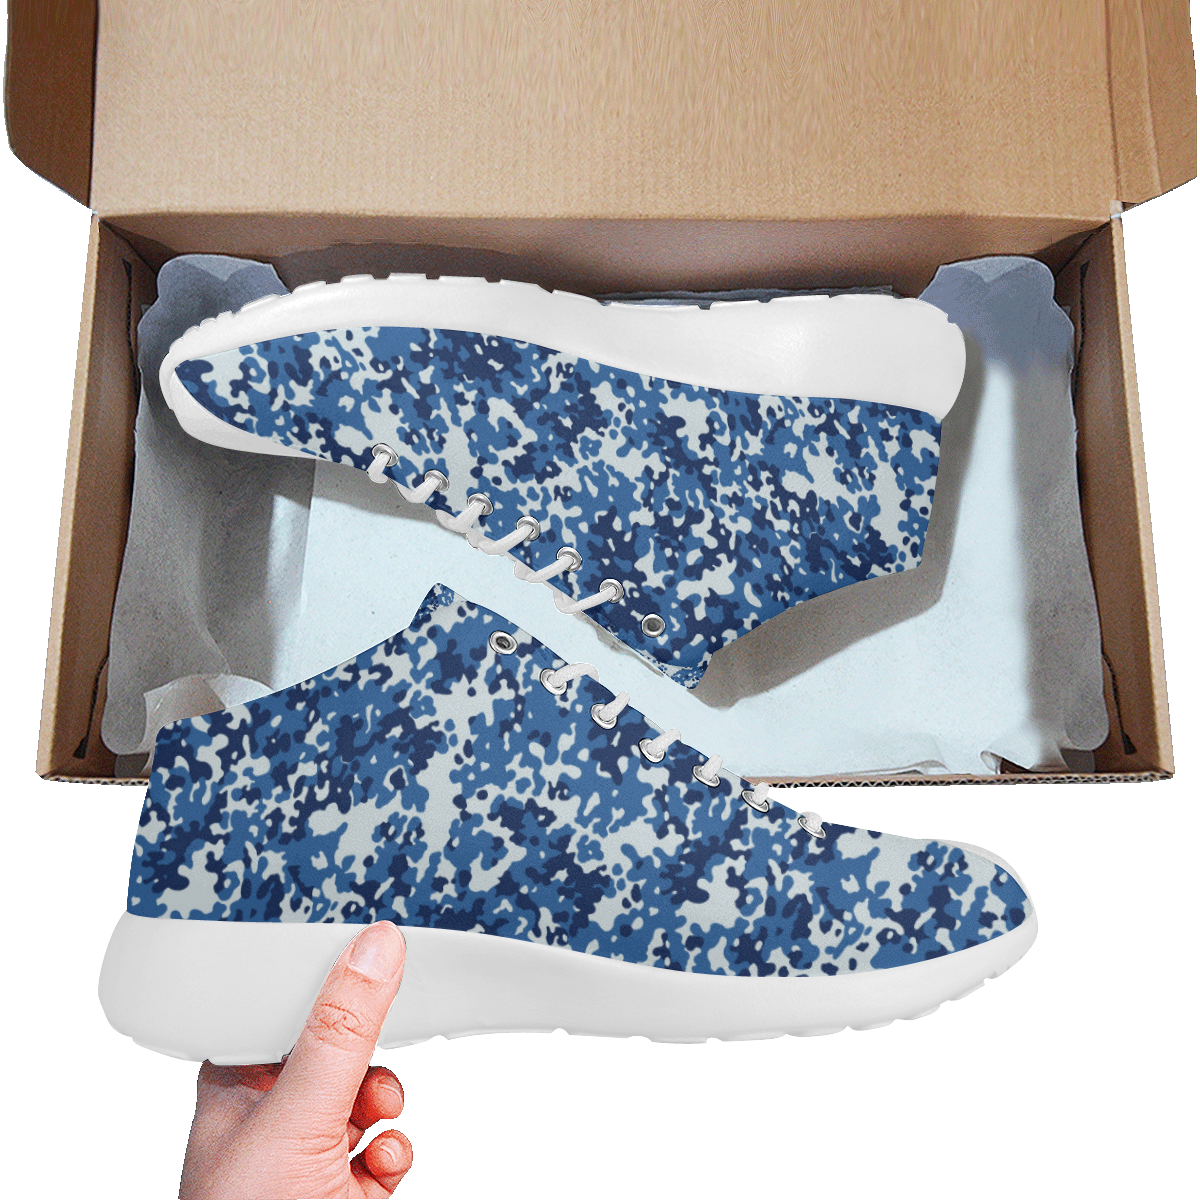 Digital Blue Camouflage Women's Basketball Training Shoes (Model 47502)